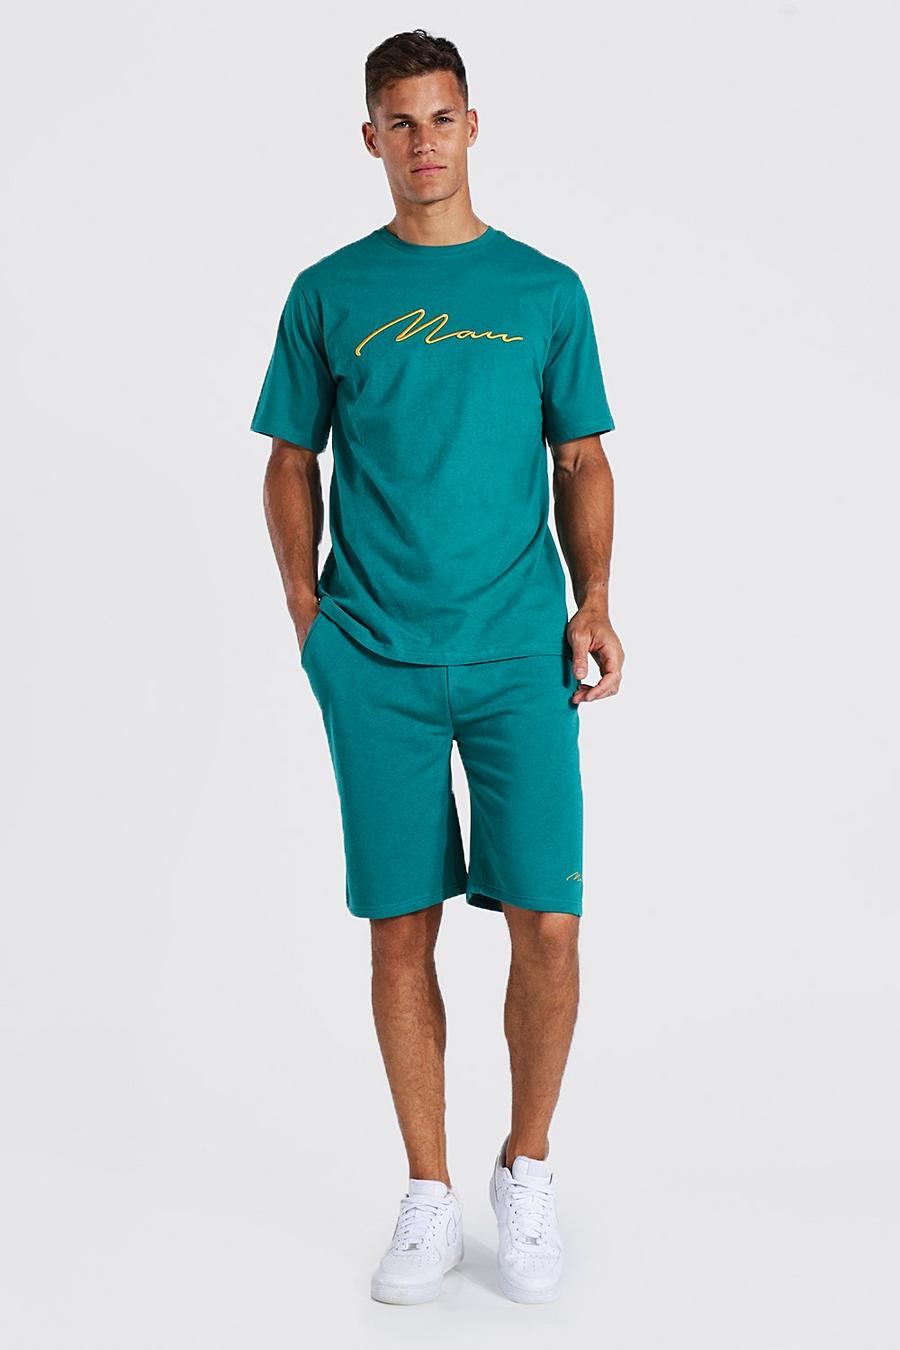 Set Tall T-shirt & pantaloncini con logo Man ricamato in rilievo, Teal verde image number 1